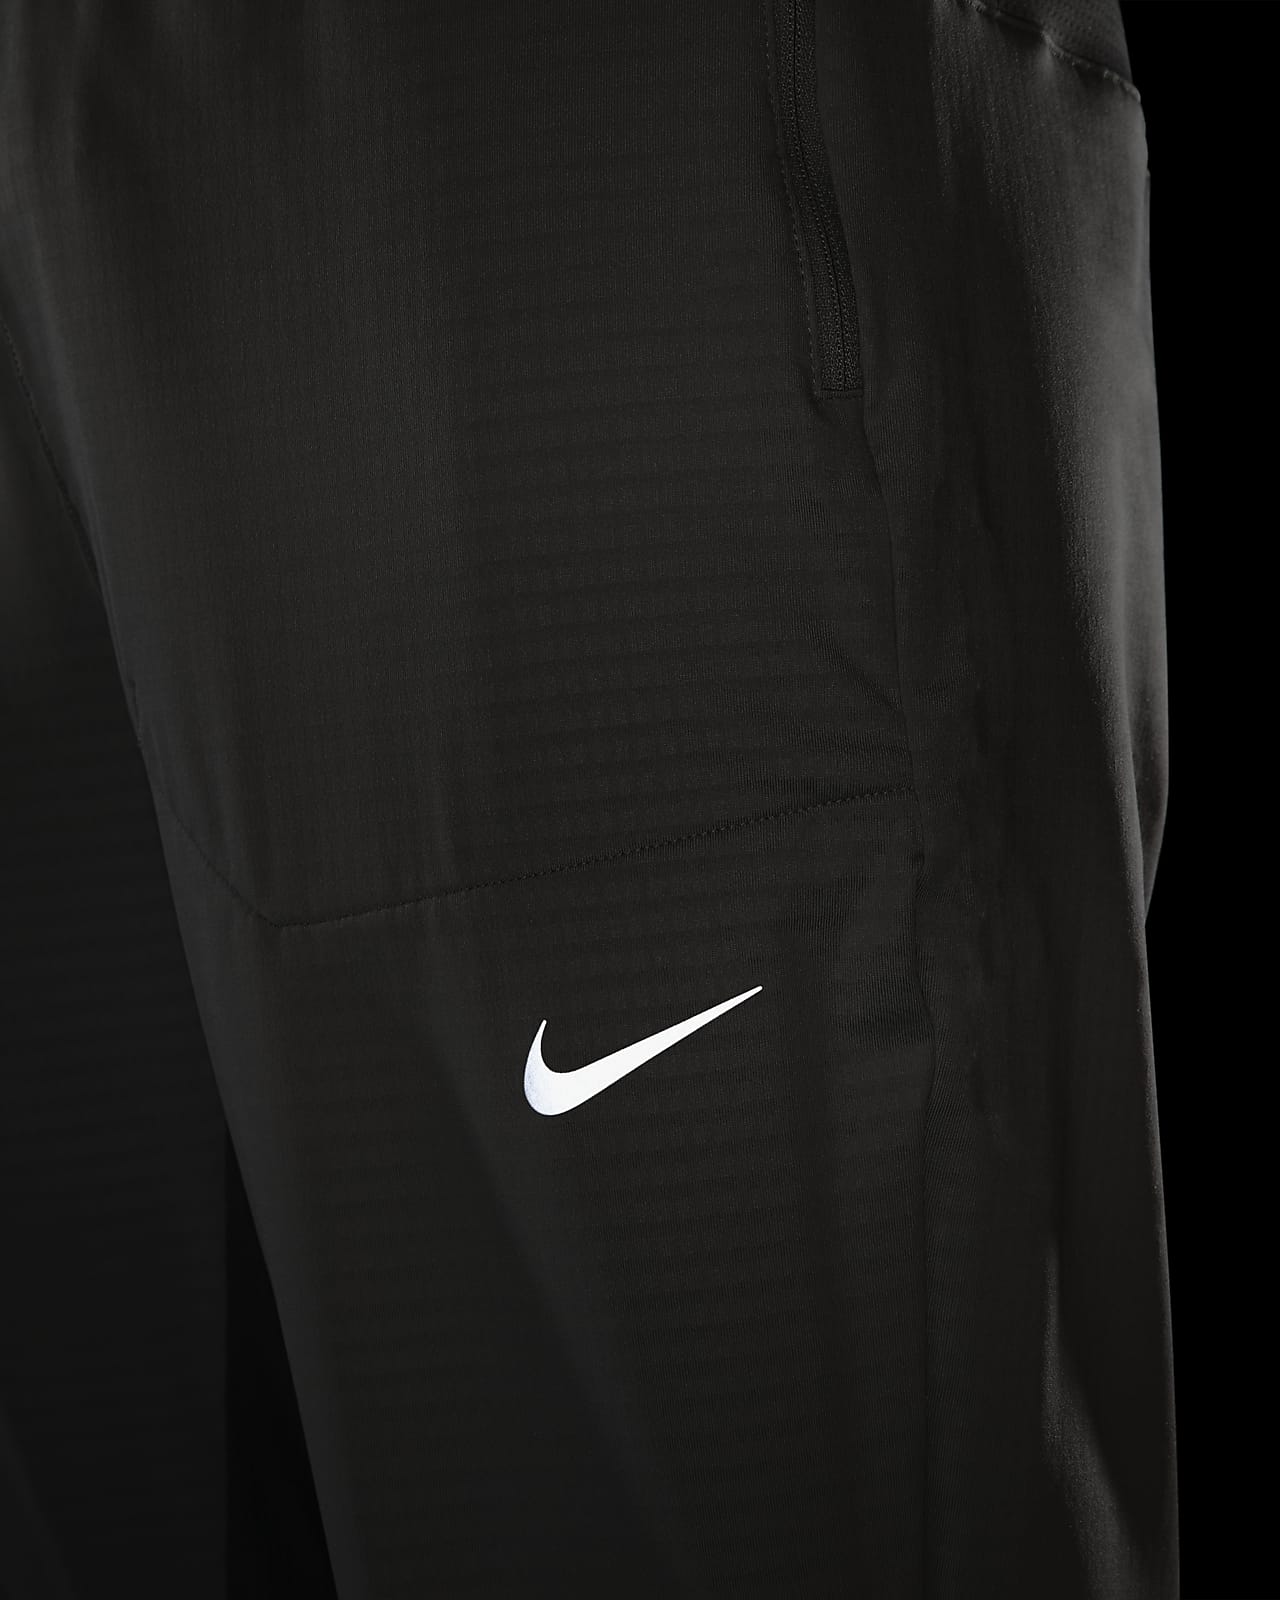 Utah Jazz Nike NBA Authentics Dri-Fit Athletic Pants Men's Black New LT 524